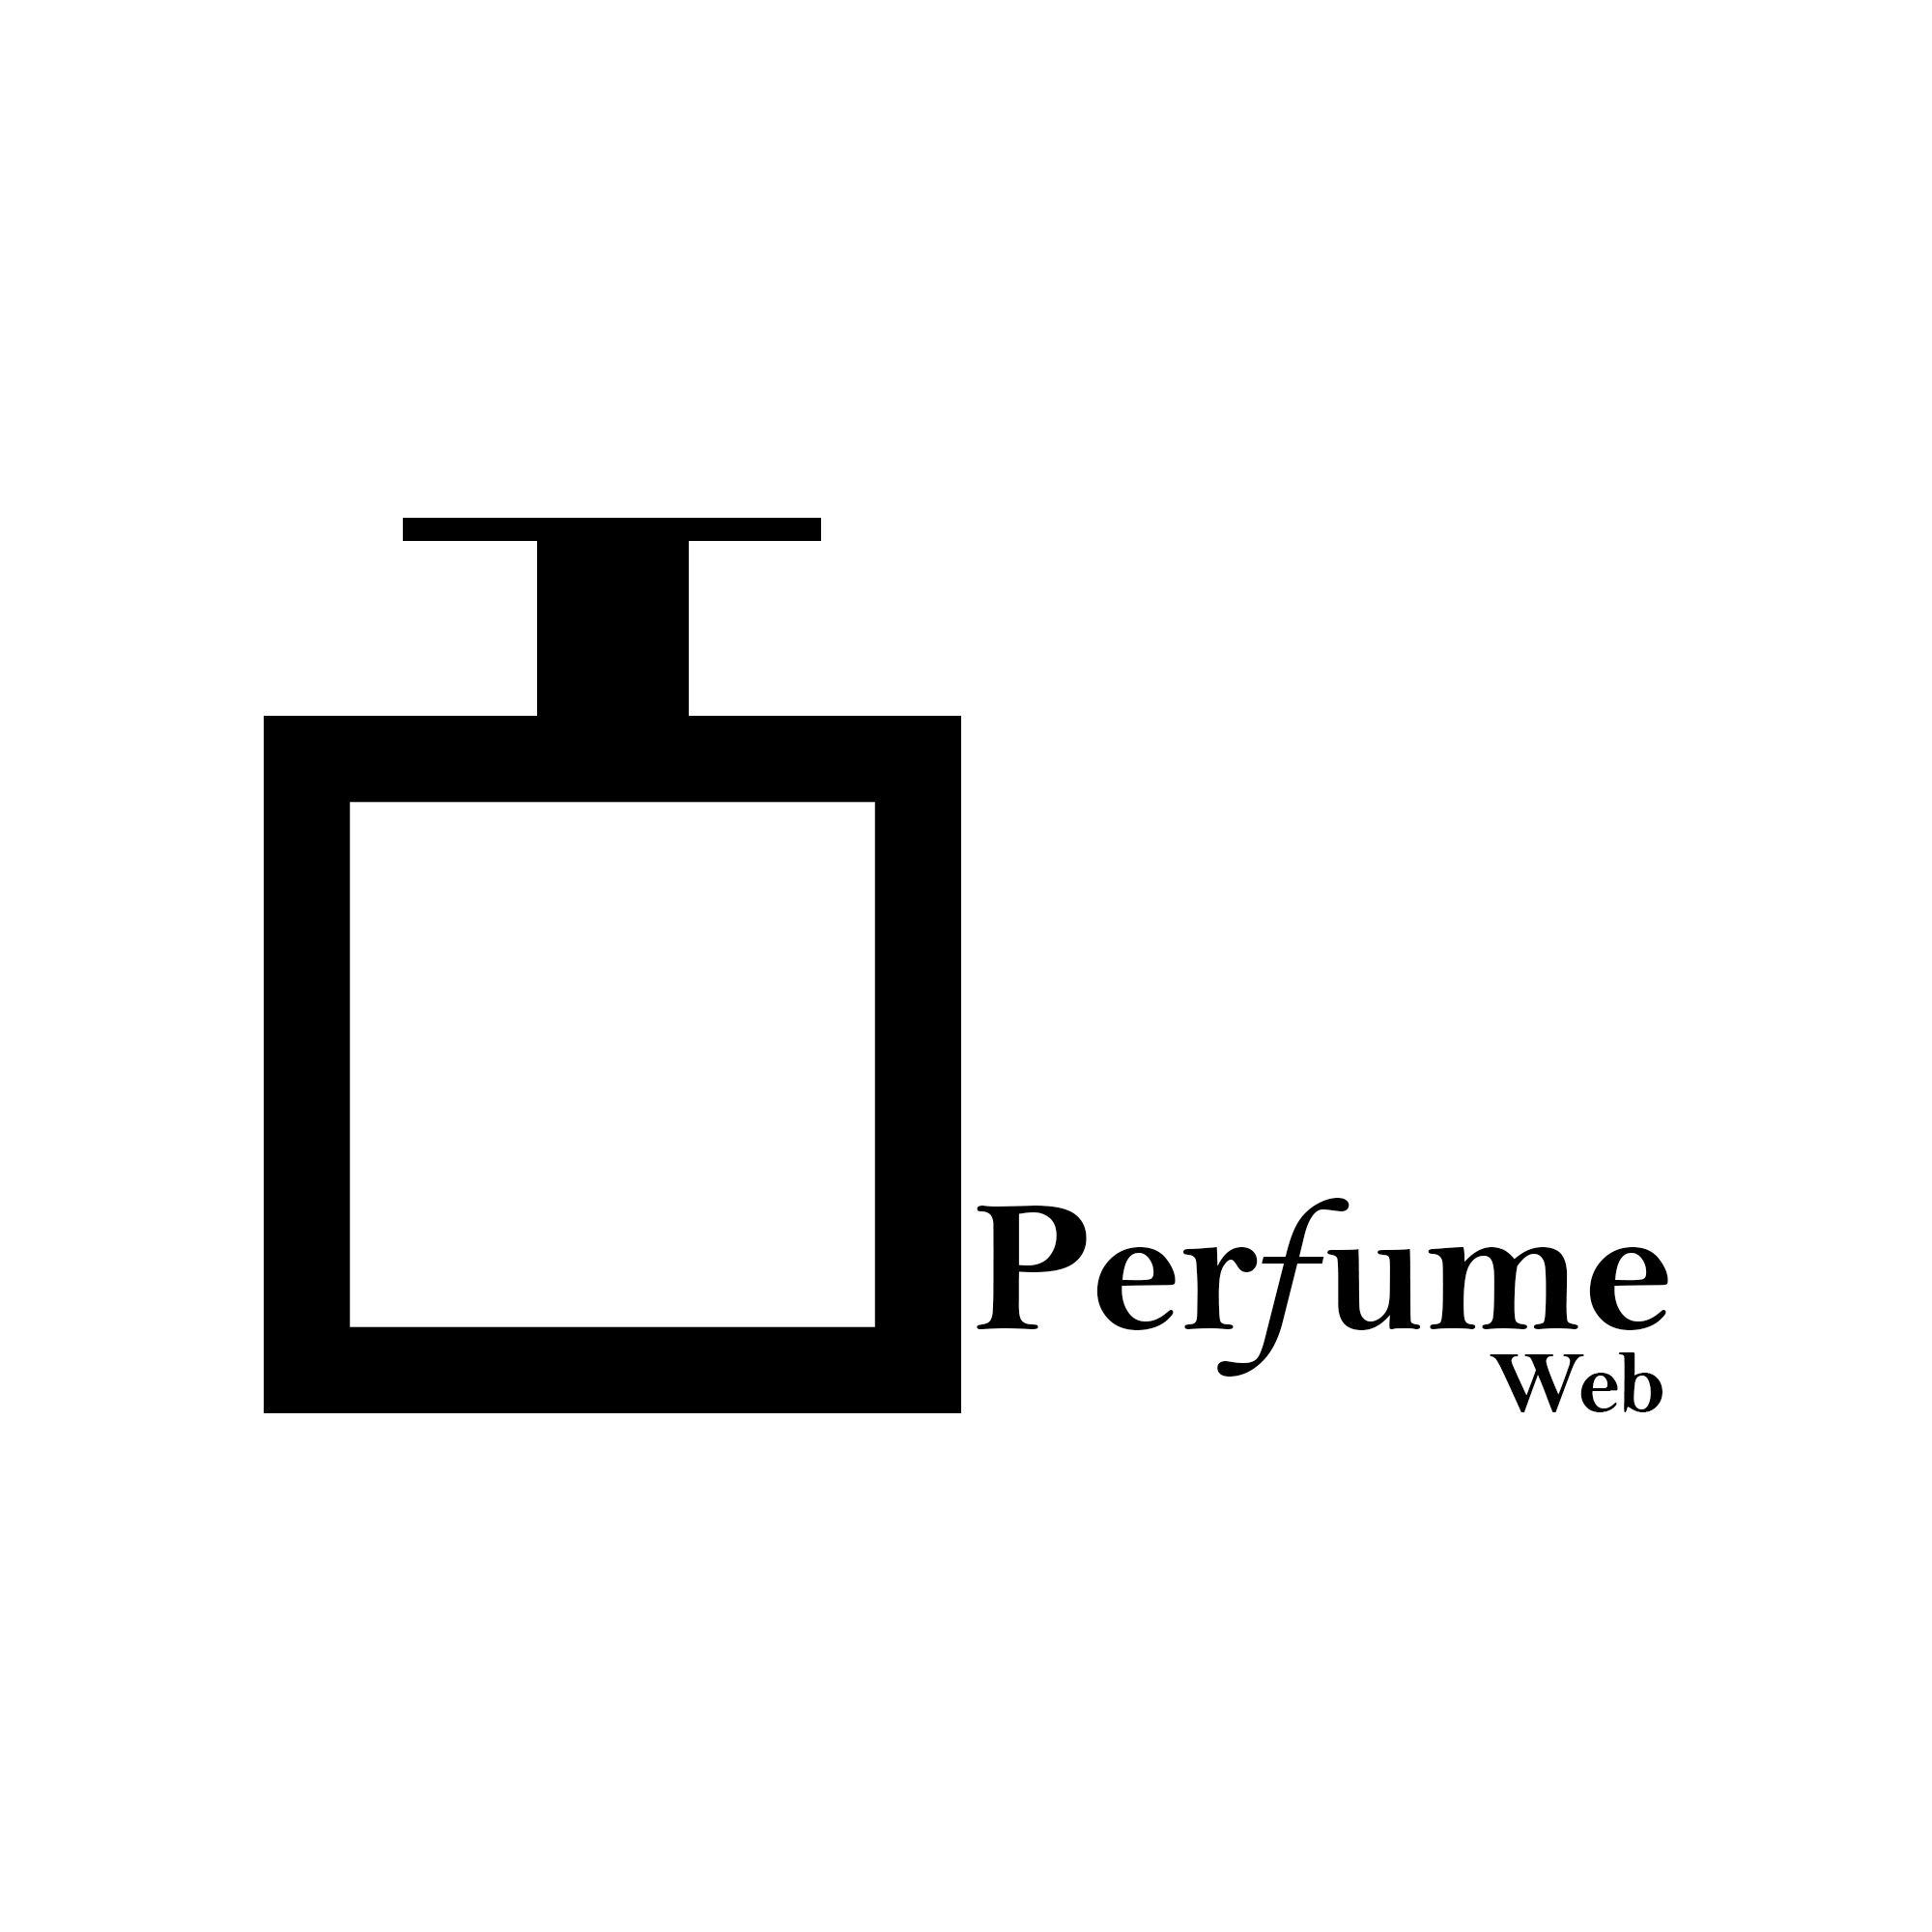 Perfume Web